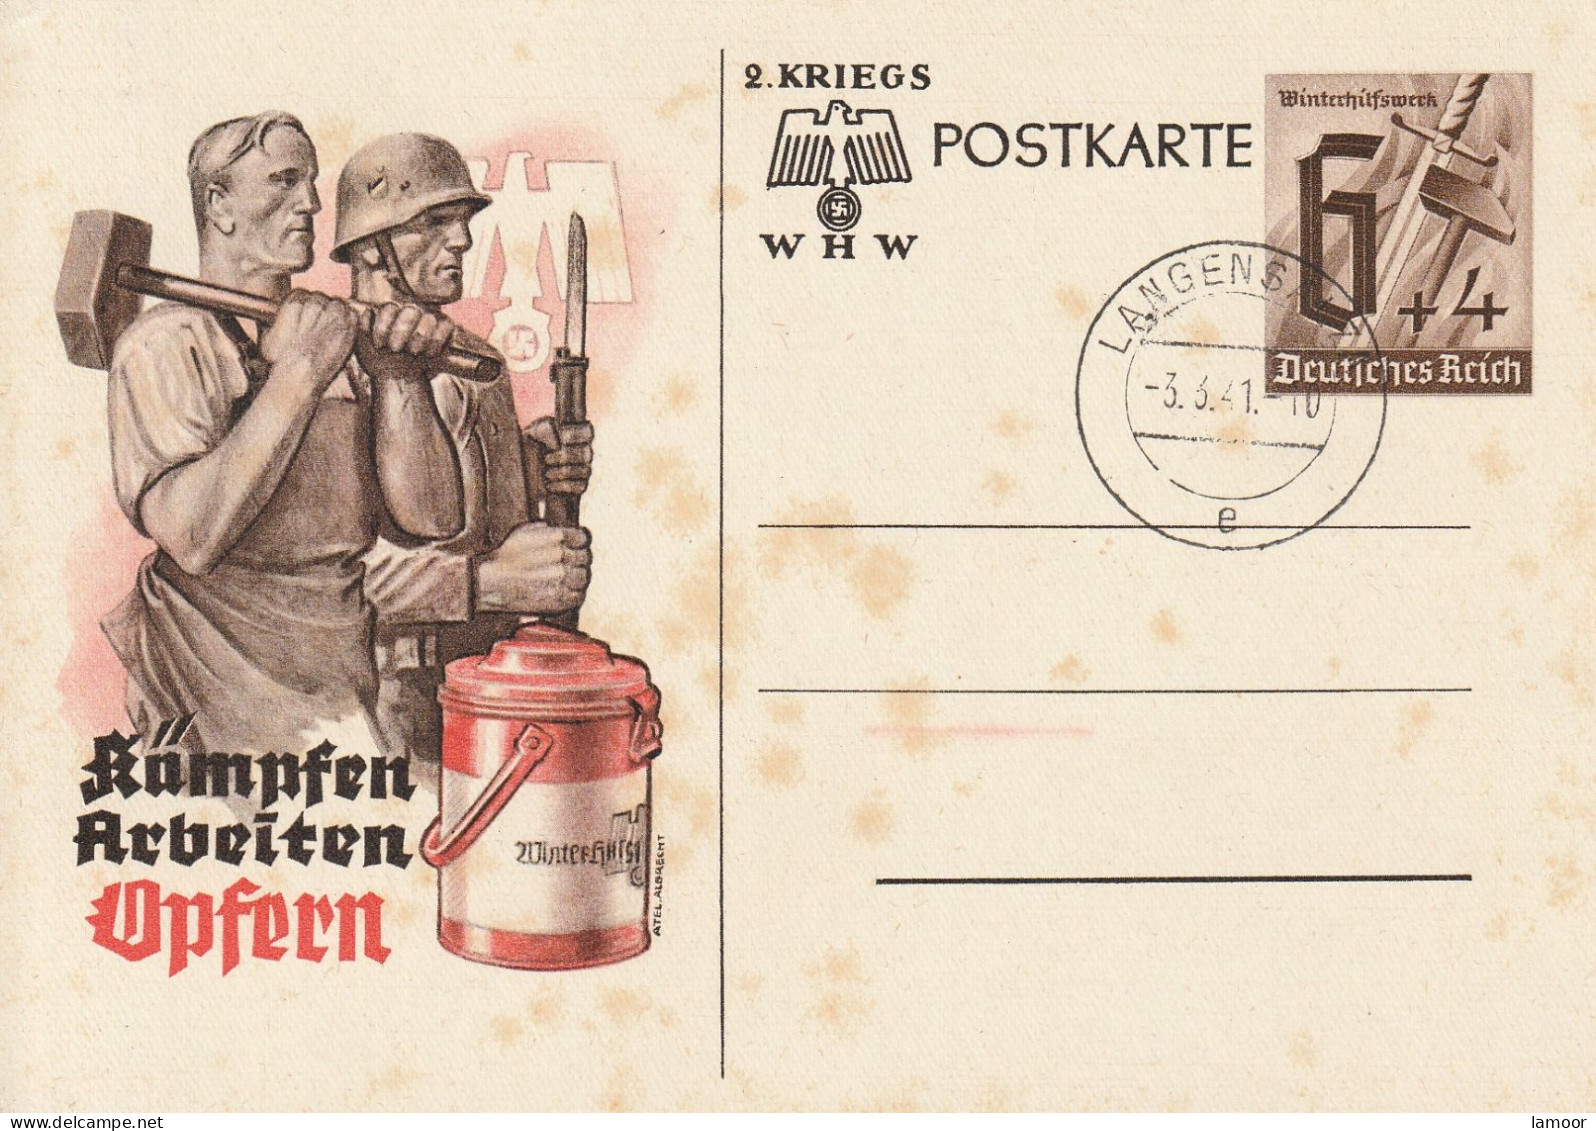 Deutsche Reich Postkarte Postfresch Ungelaufene Adolf Hitler - Collezioni E Lotti